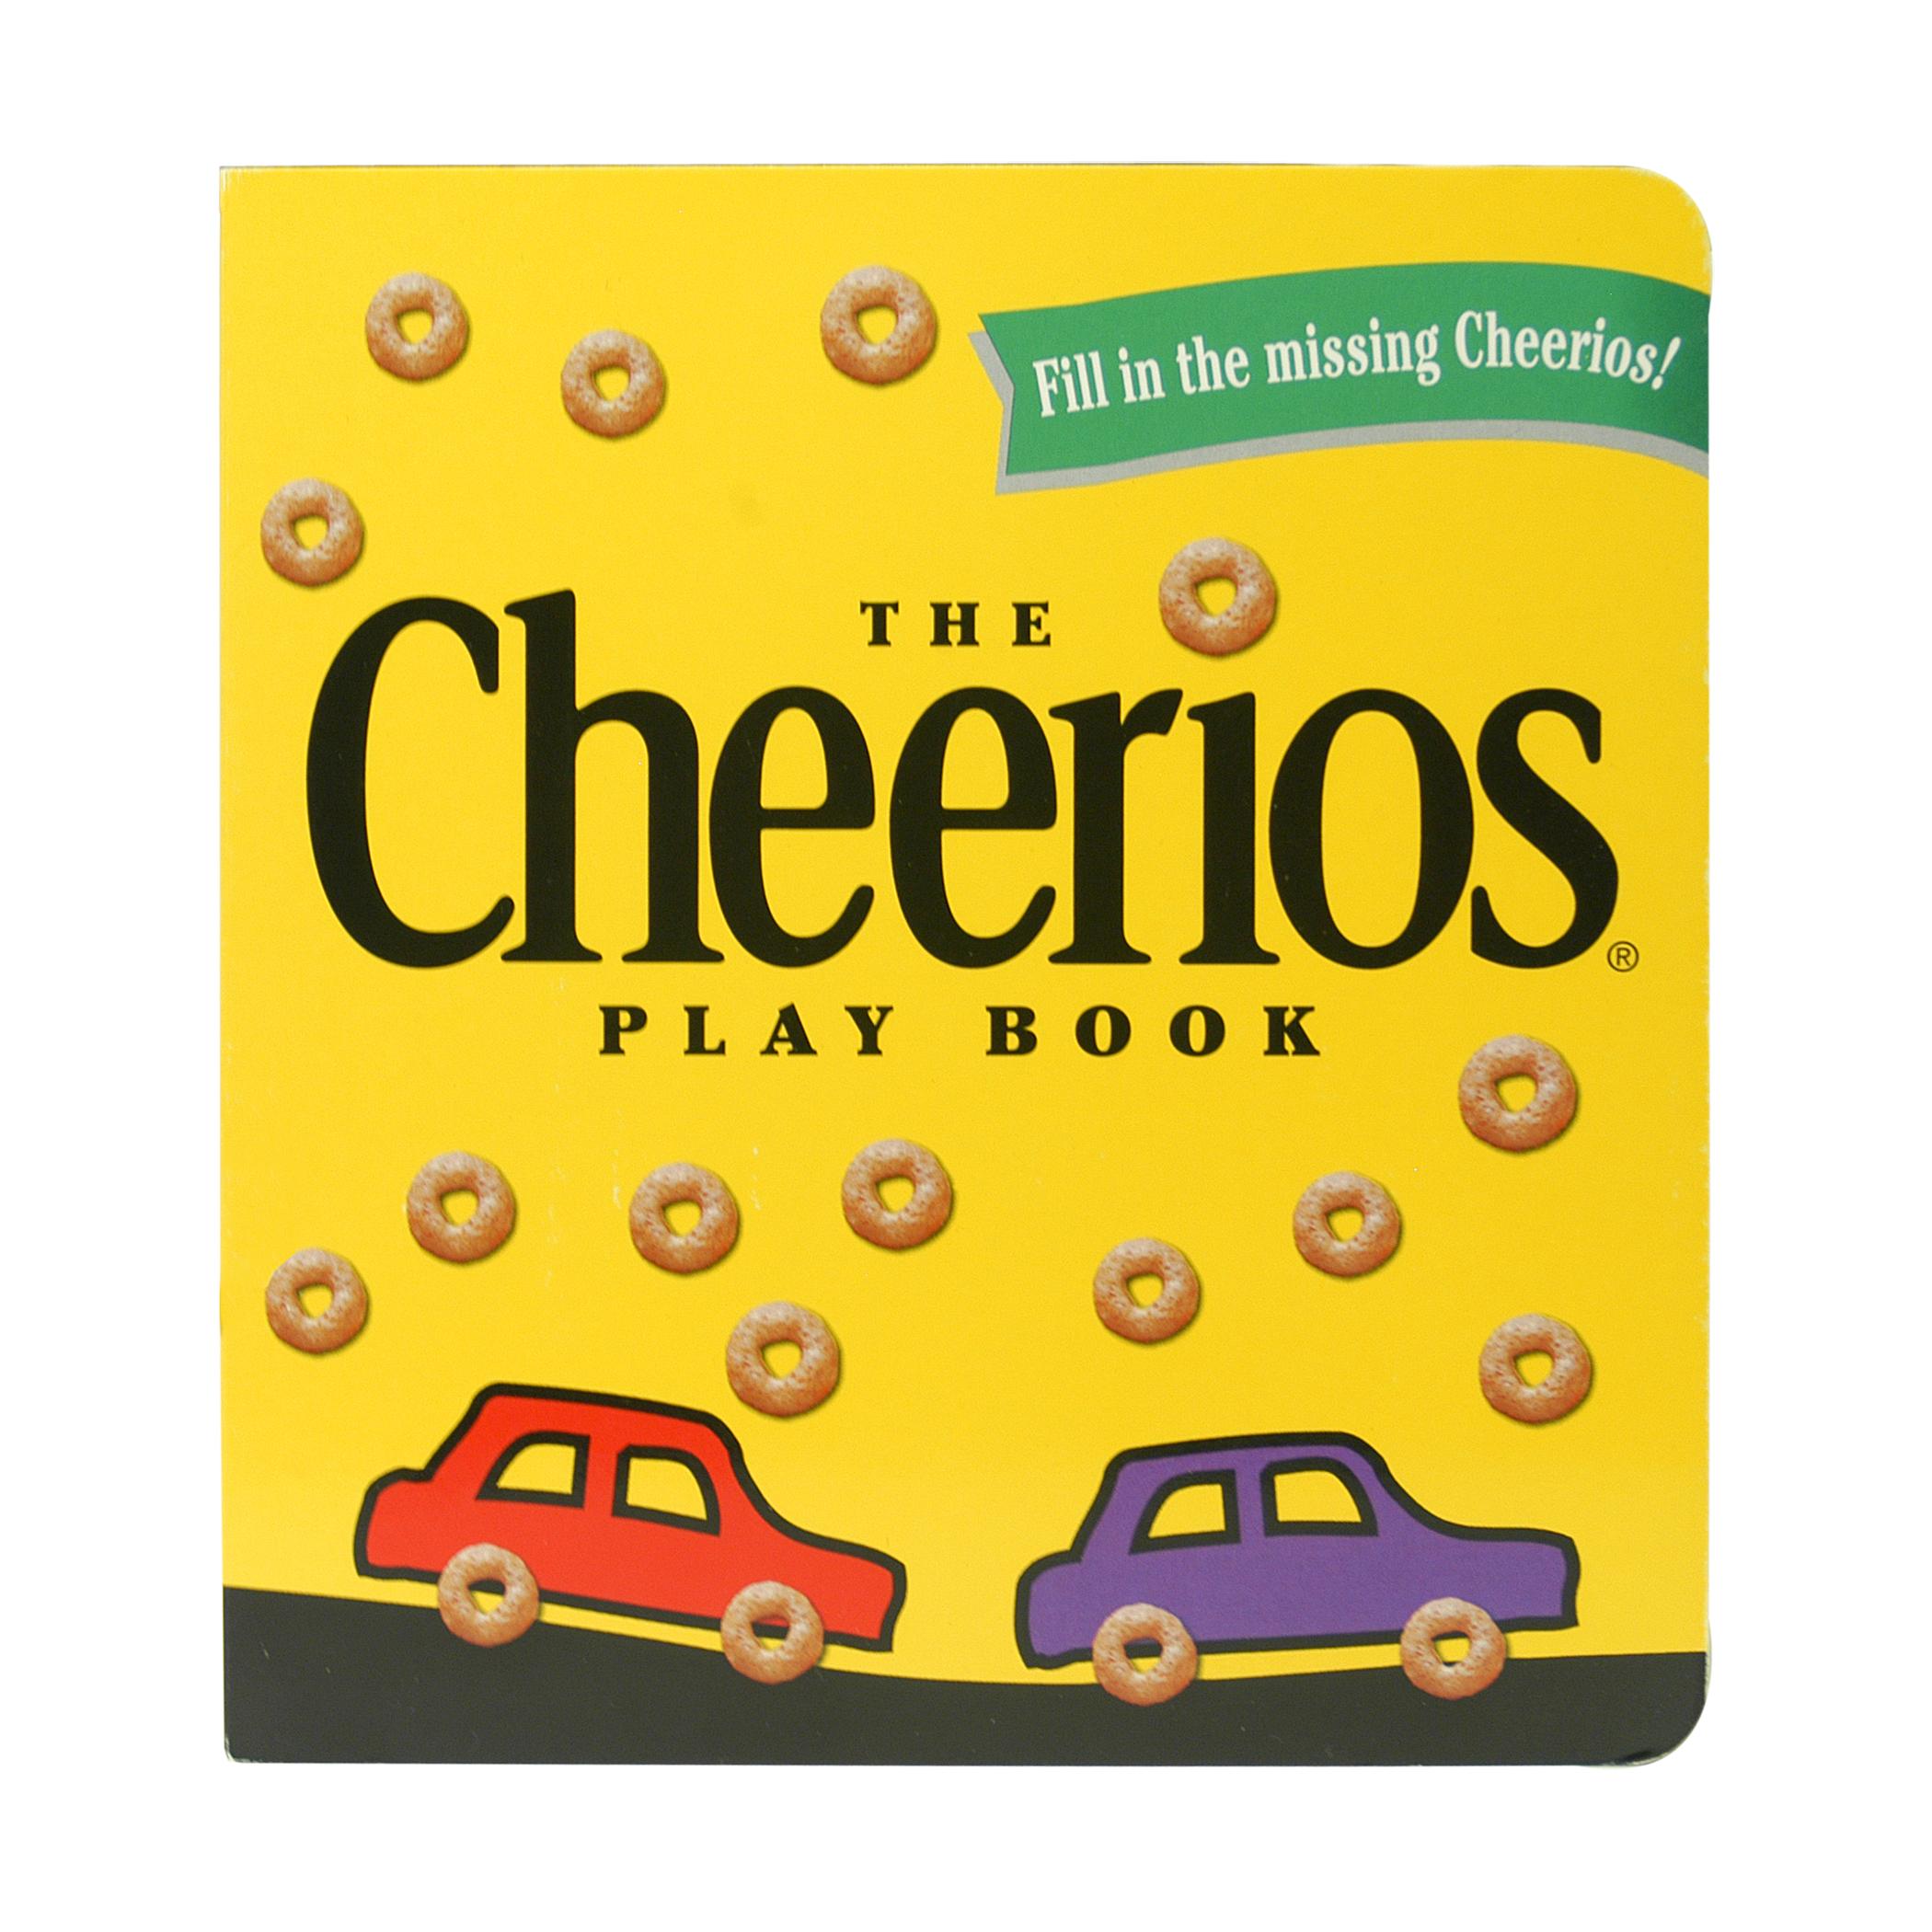  The Cheerios Play Book